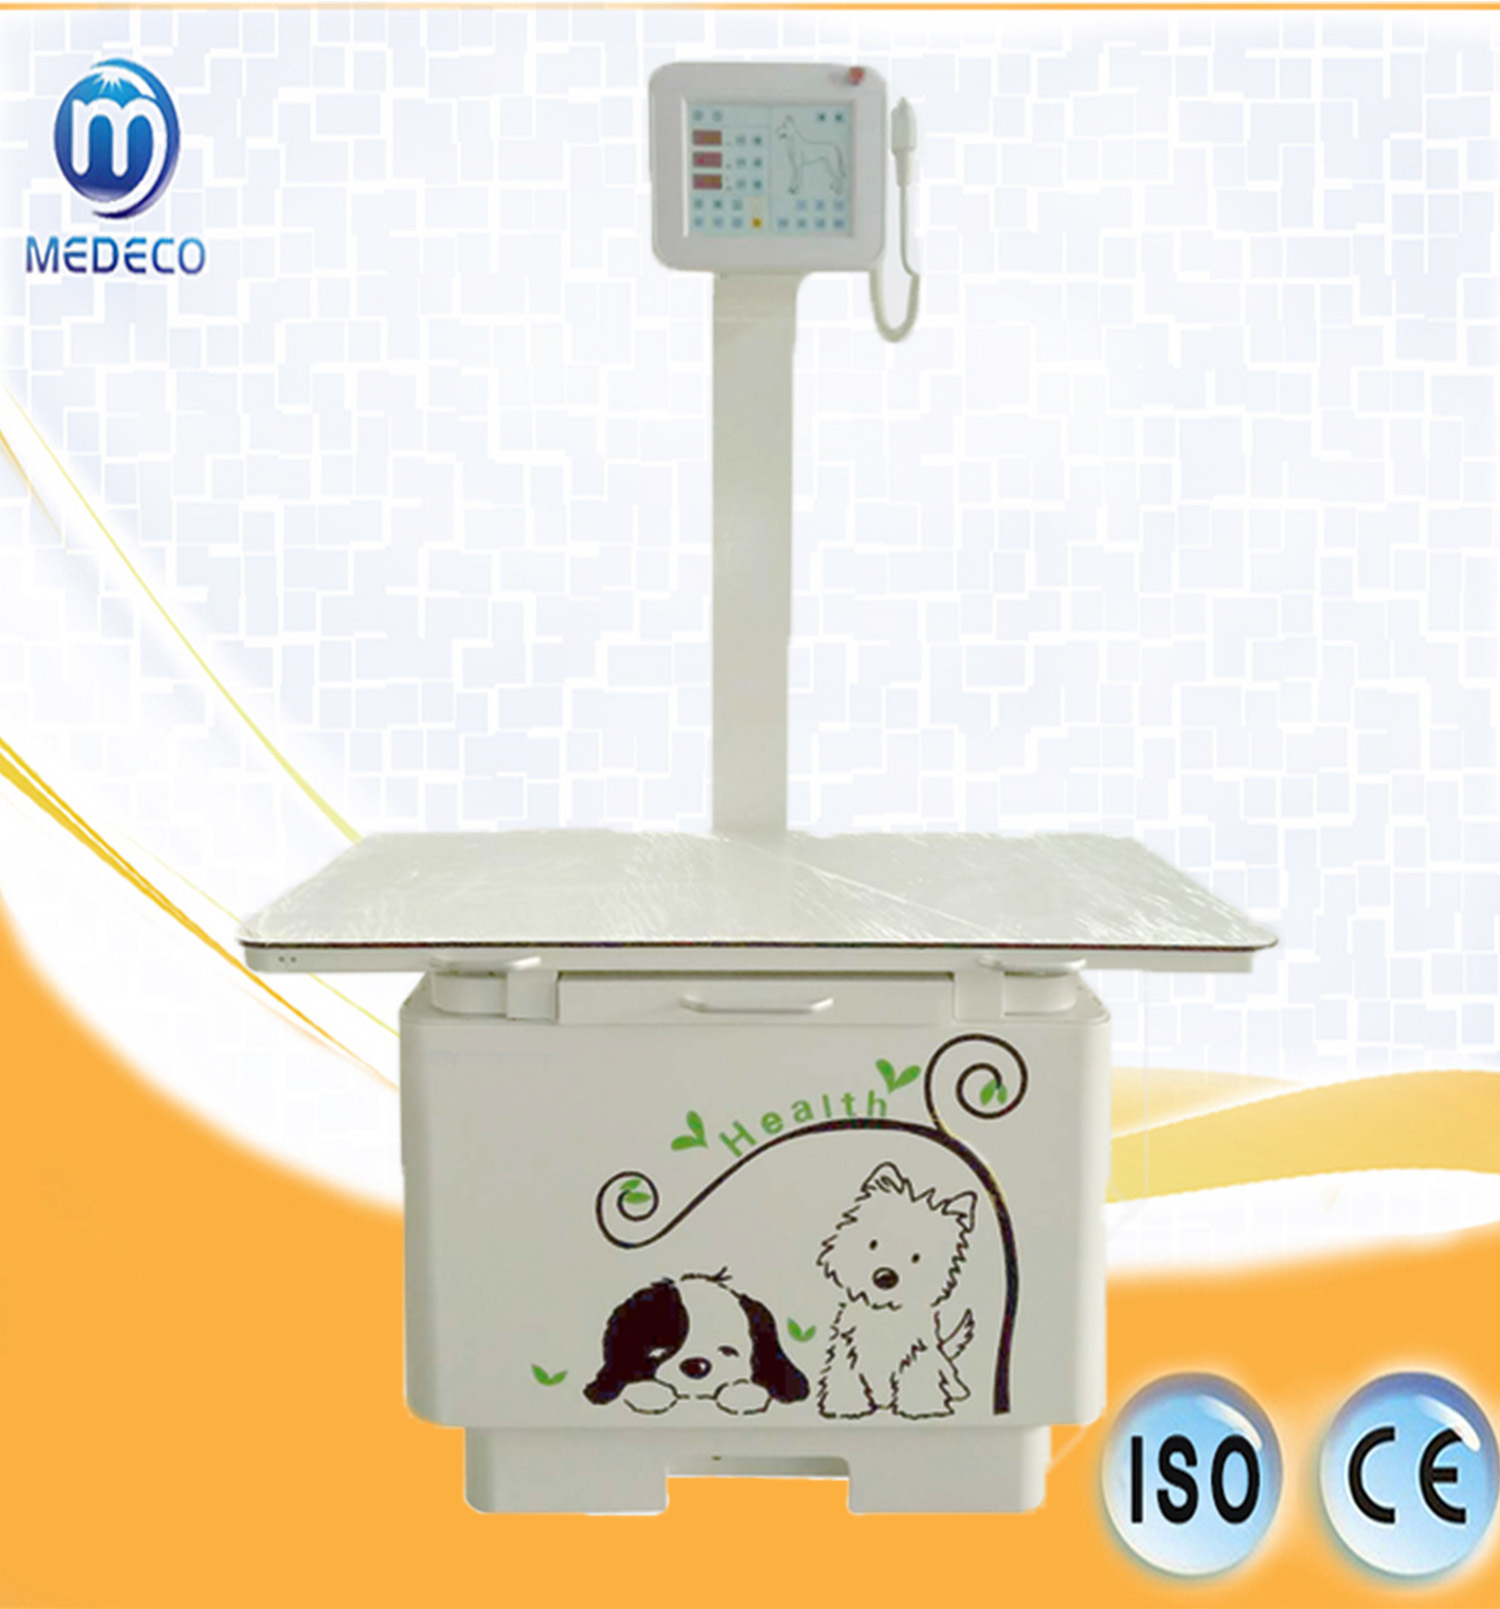 Medeco Veterinay Equipment Animal X-ray Machine Model7104 for Vet Hospital Use